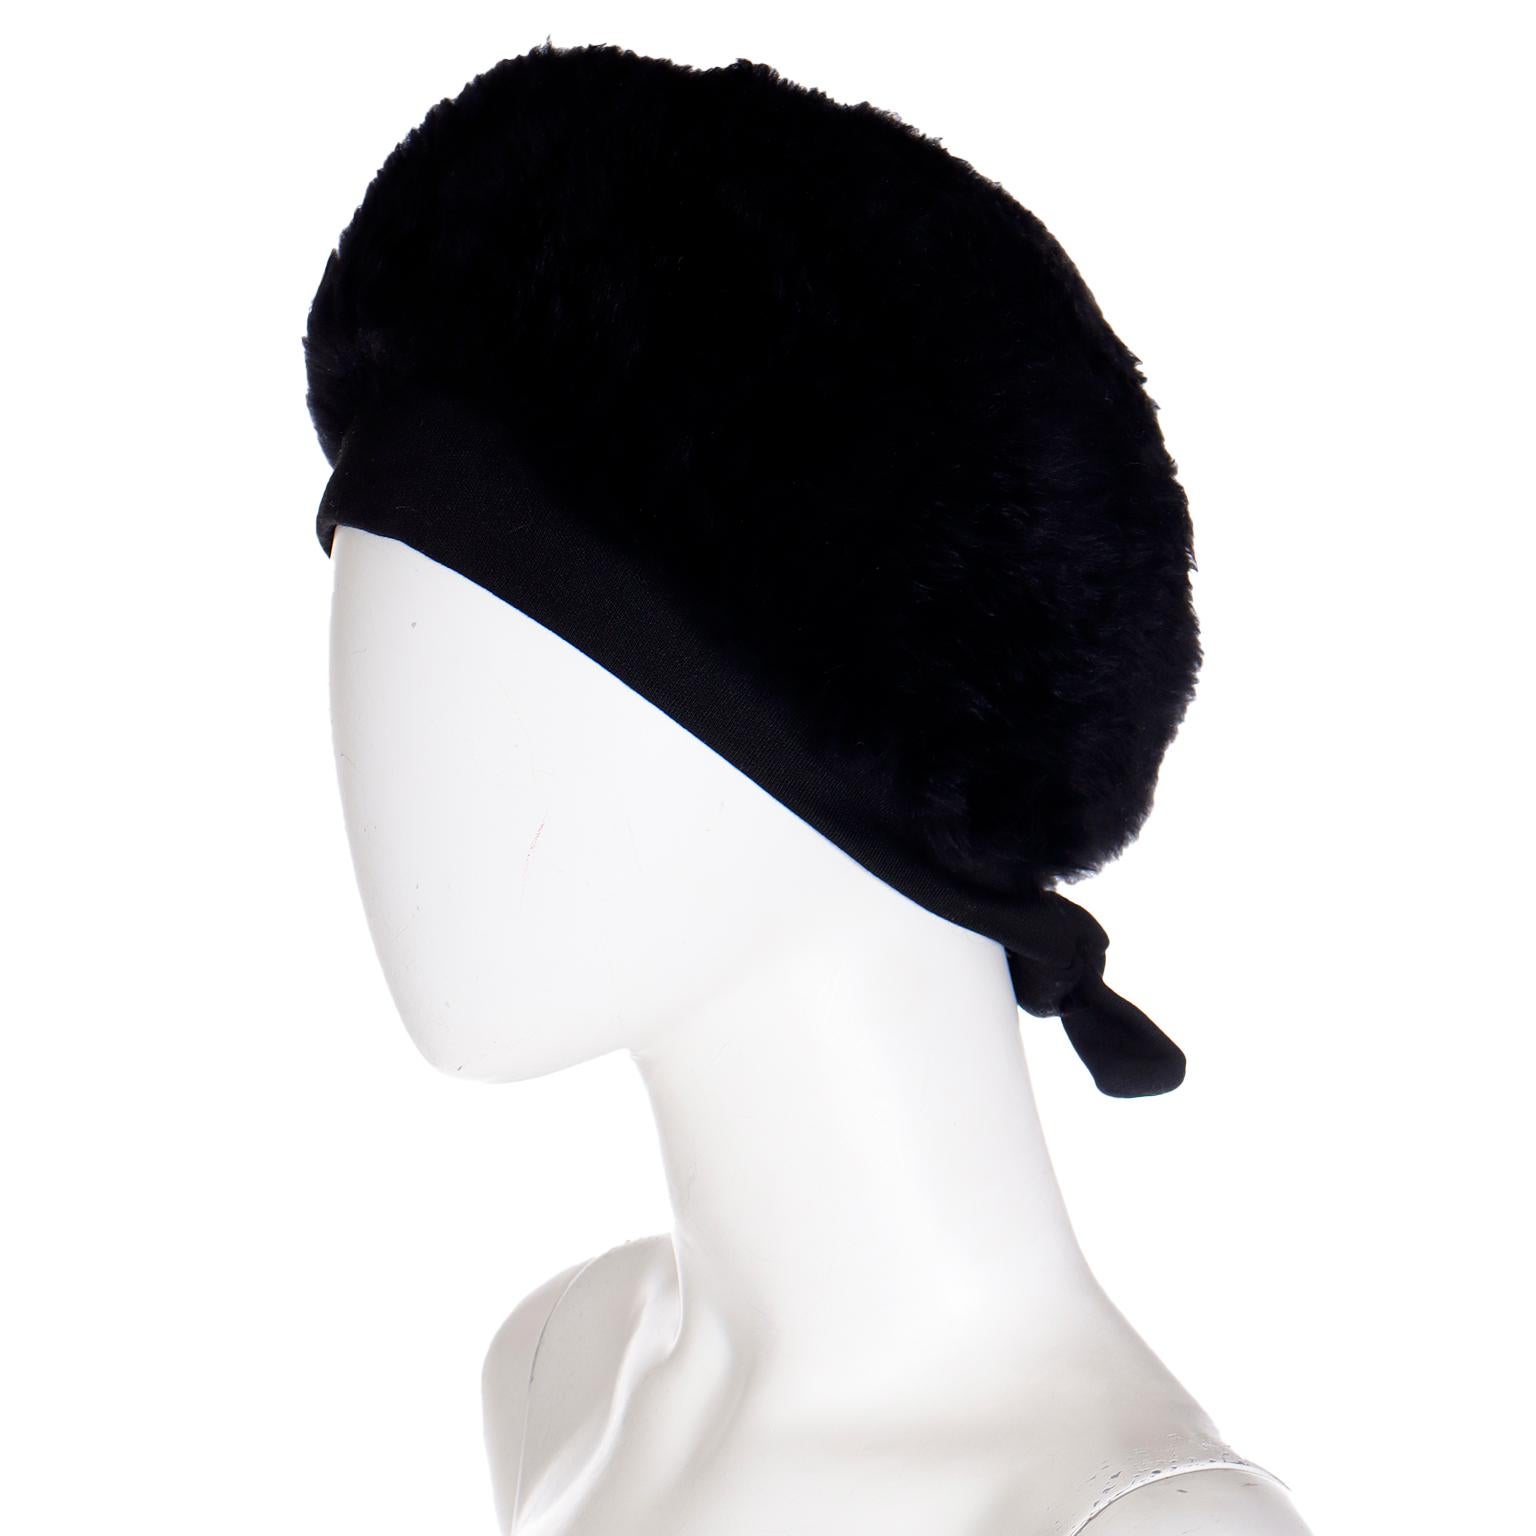 Yves Saint Laurent 1970s Russian inspired Vintage Black Fur Hat 1